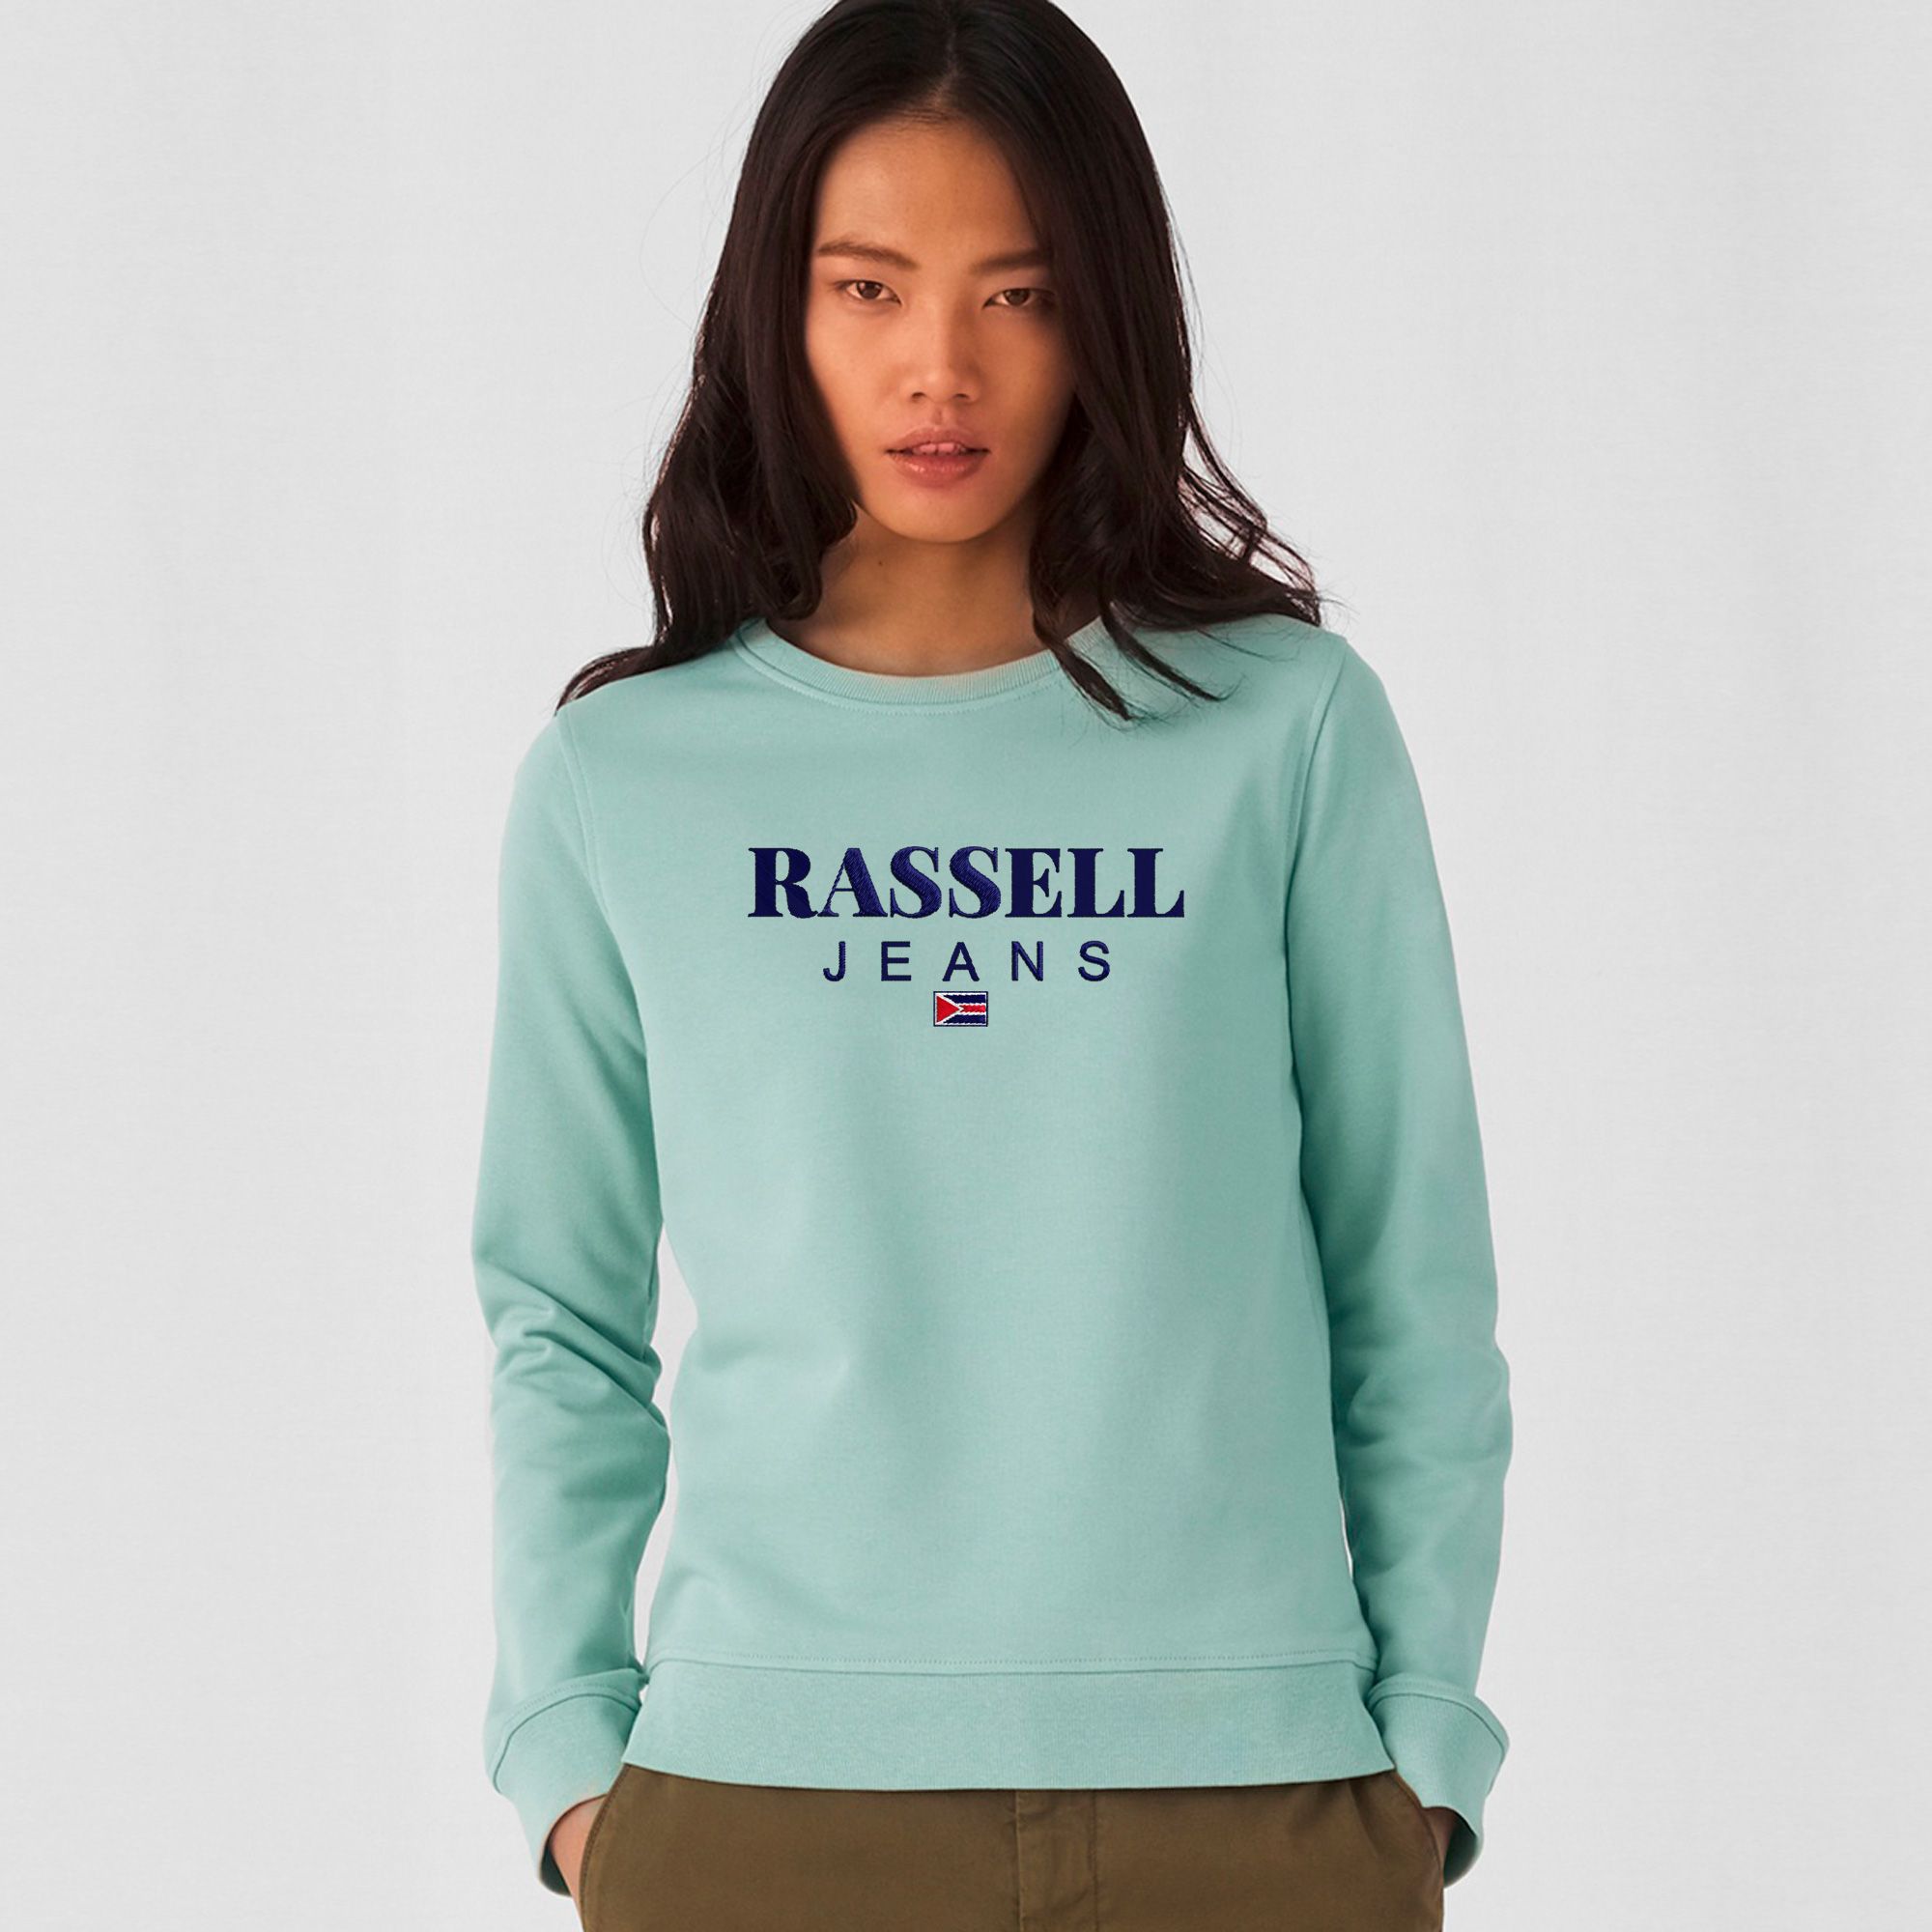 Paull Rassell Elite-Organic-Sweatshirt-Woman 408 - Sudadera orgánica - ecoligica para Mujer - Sudadera sin capucha moderna - Sudadera de marcas famosas